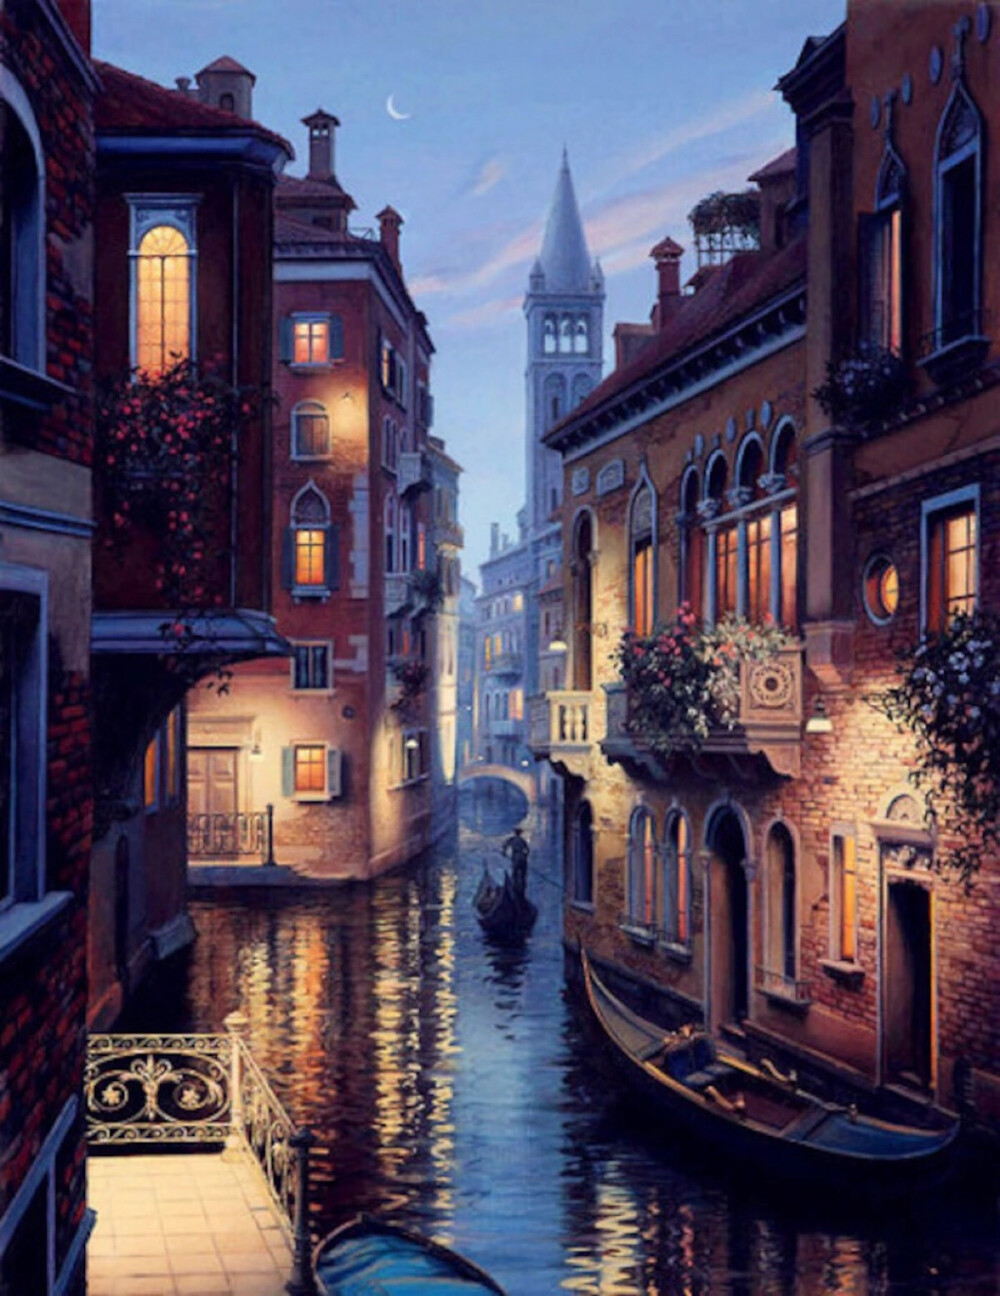 Venice, Italy(by Andreas Limbrunner)。意大利威尼斯，並非单一座岛屿，而是由一百六十条运河分割成一百一十八座小岛的群岛，跨越运河的桥超过四百座。威尼斯的动脉“大运河”(Grand Canal)两岸，尽是水都最美丽的建筑物。